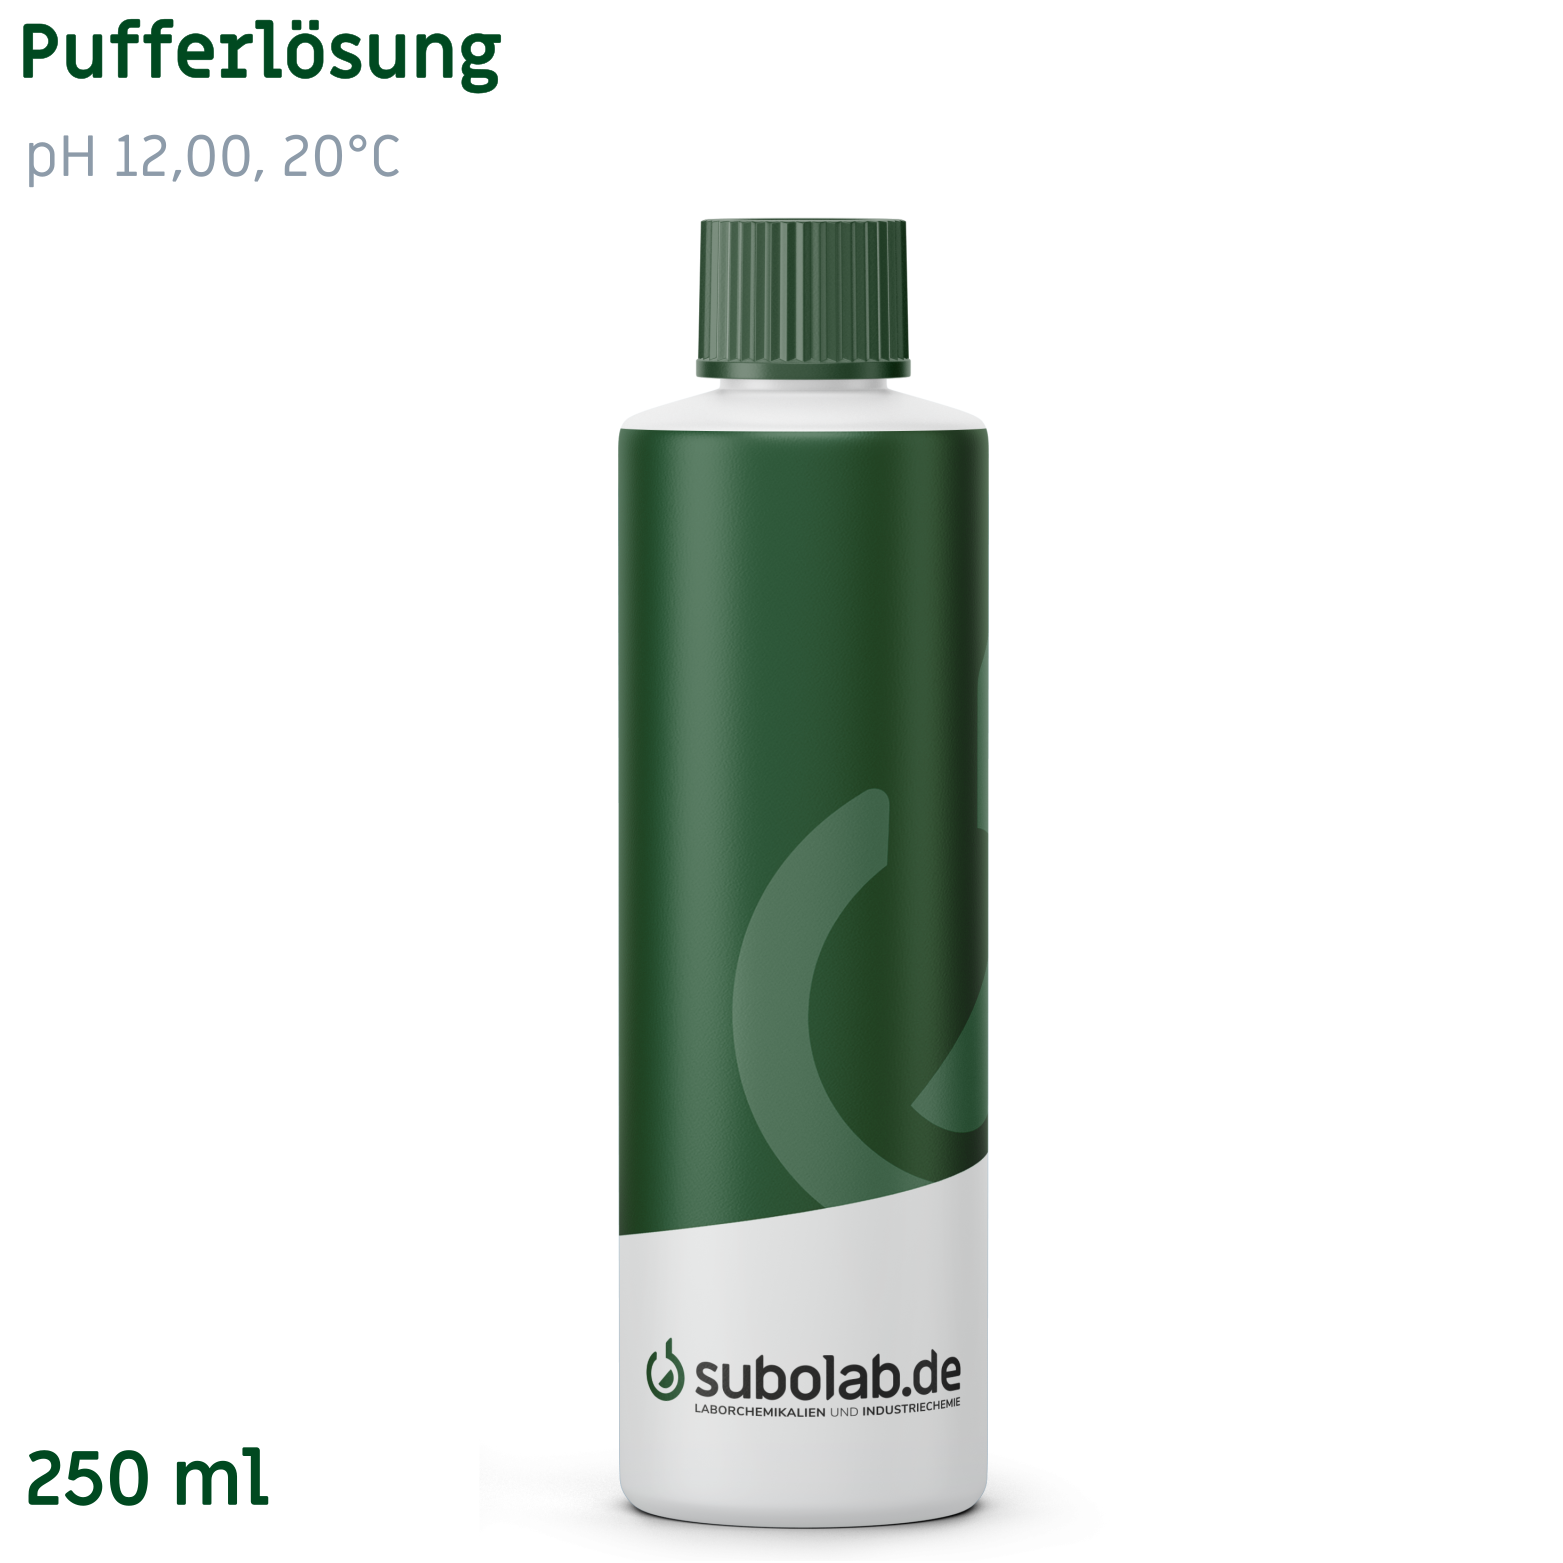 Bild von Pufferlösung pH 12,00, 20°C (di-Natriumhydrogenphosphat, Natronlauge) (250 ml)